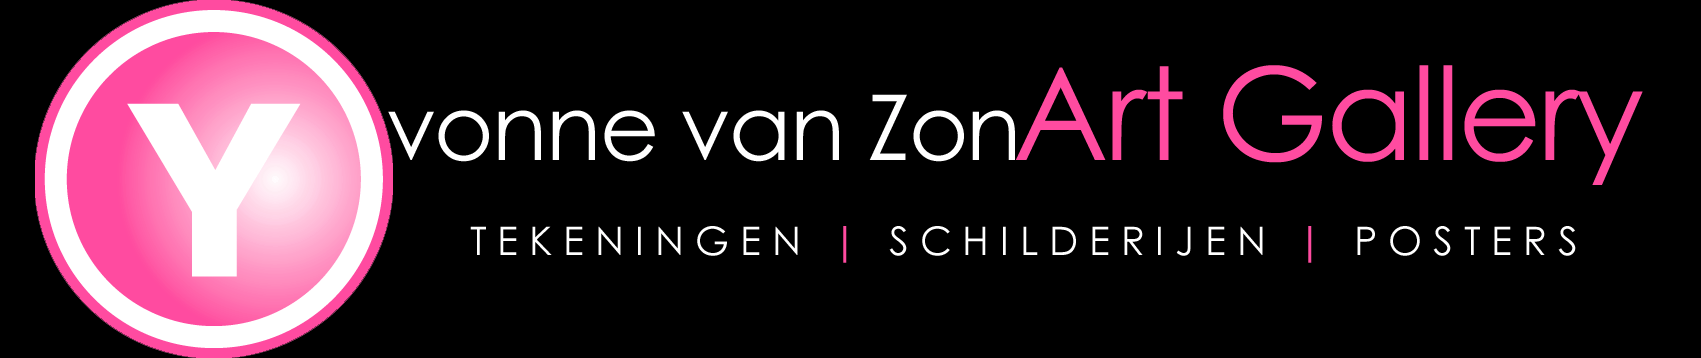 Yvonne van Zon Art Gallery